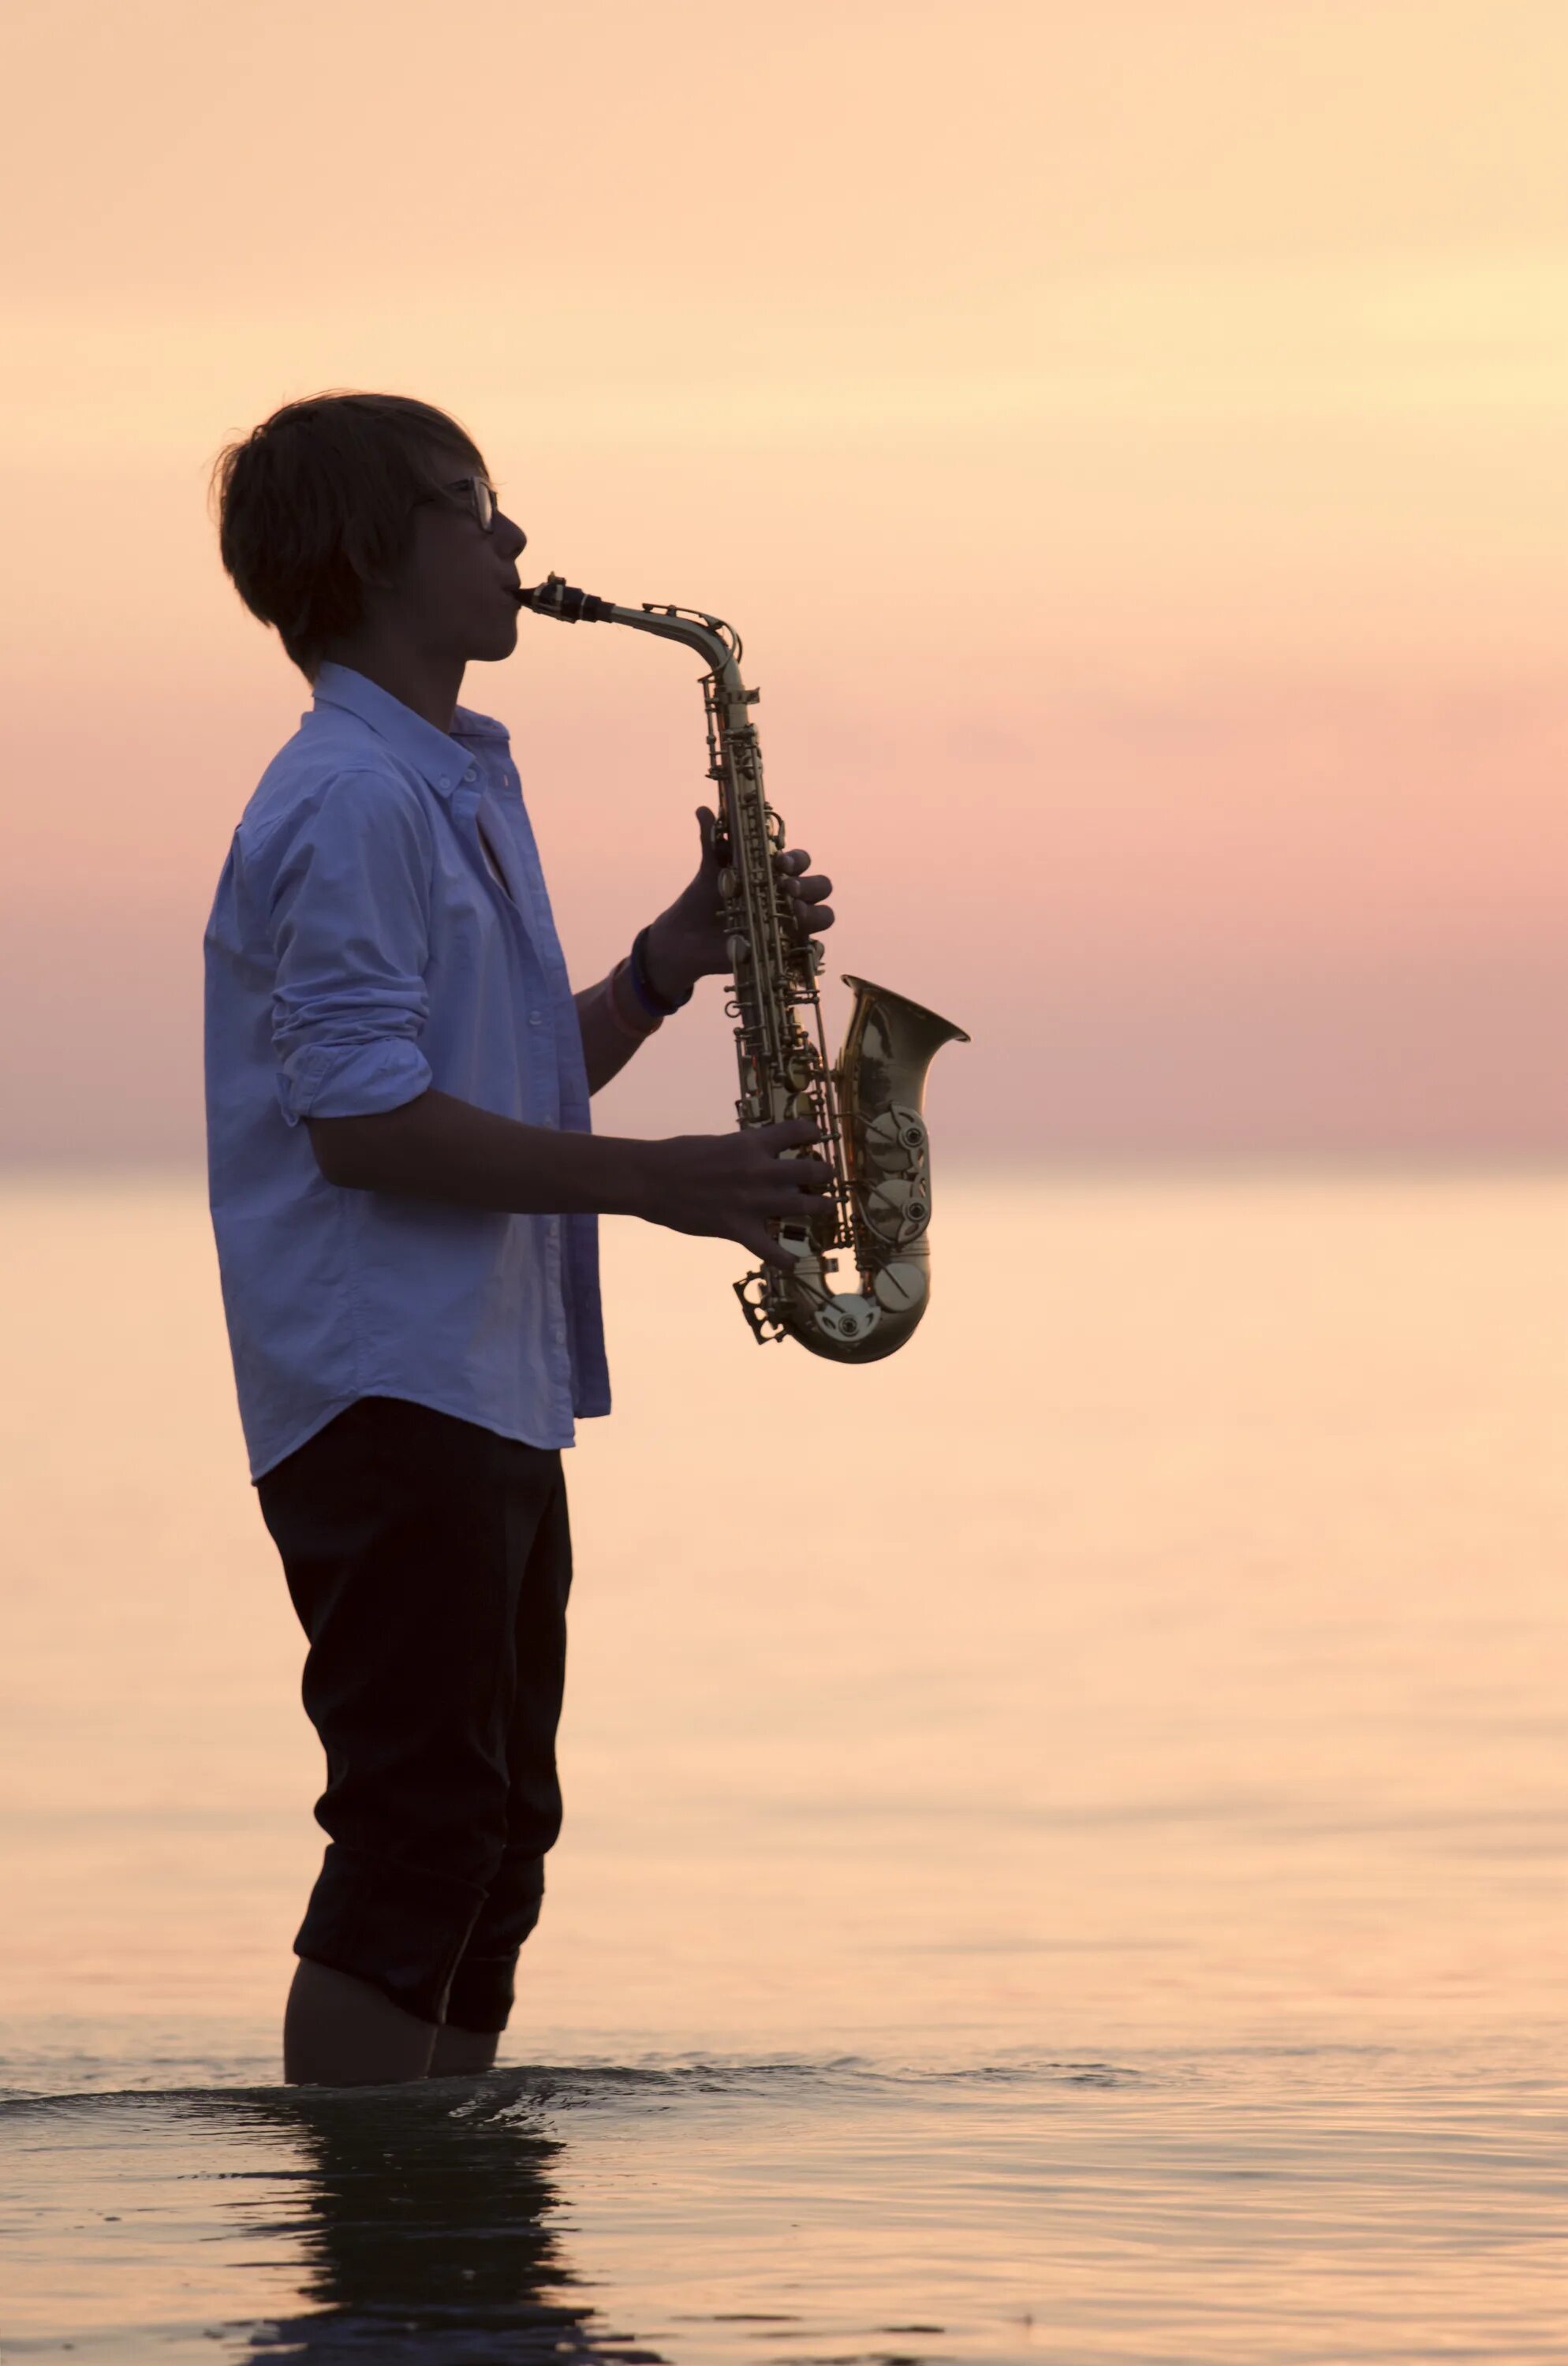 Красивые мелодии на саксофоне. Саксофон. Саксофонист на море. Человек с саксофоном. Мужчина играющий на саксофоне.